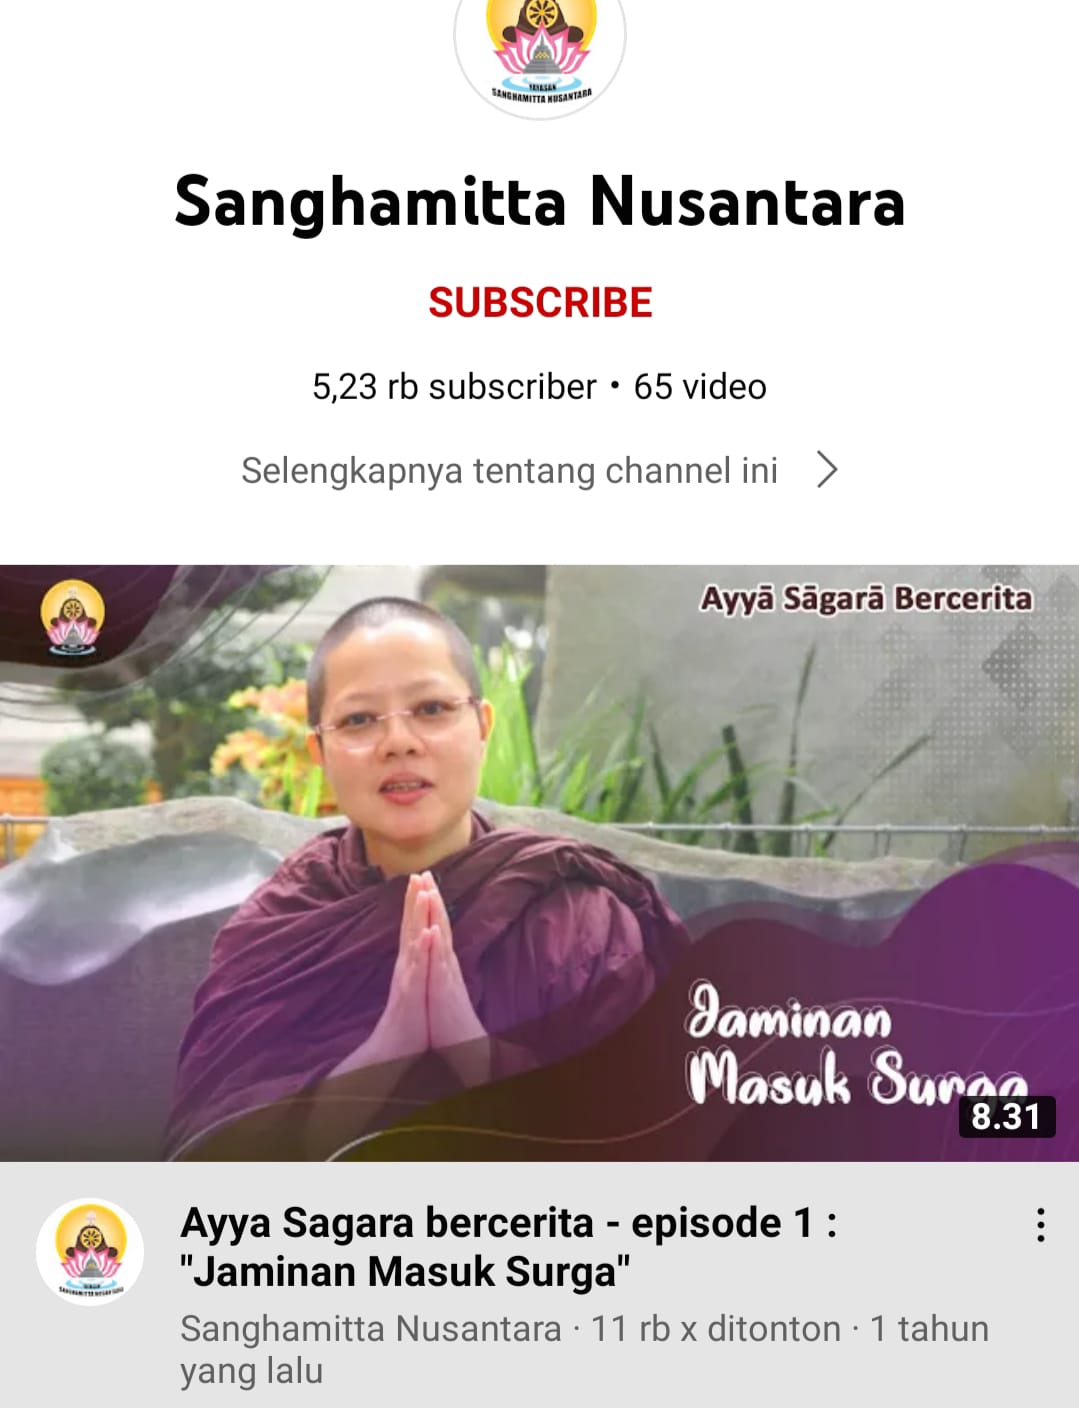 Channel YouTube Sanghamitta Nusantara Tebarkan Ajaran yang Baik untuk Diikuti Masyarakat